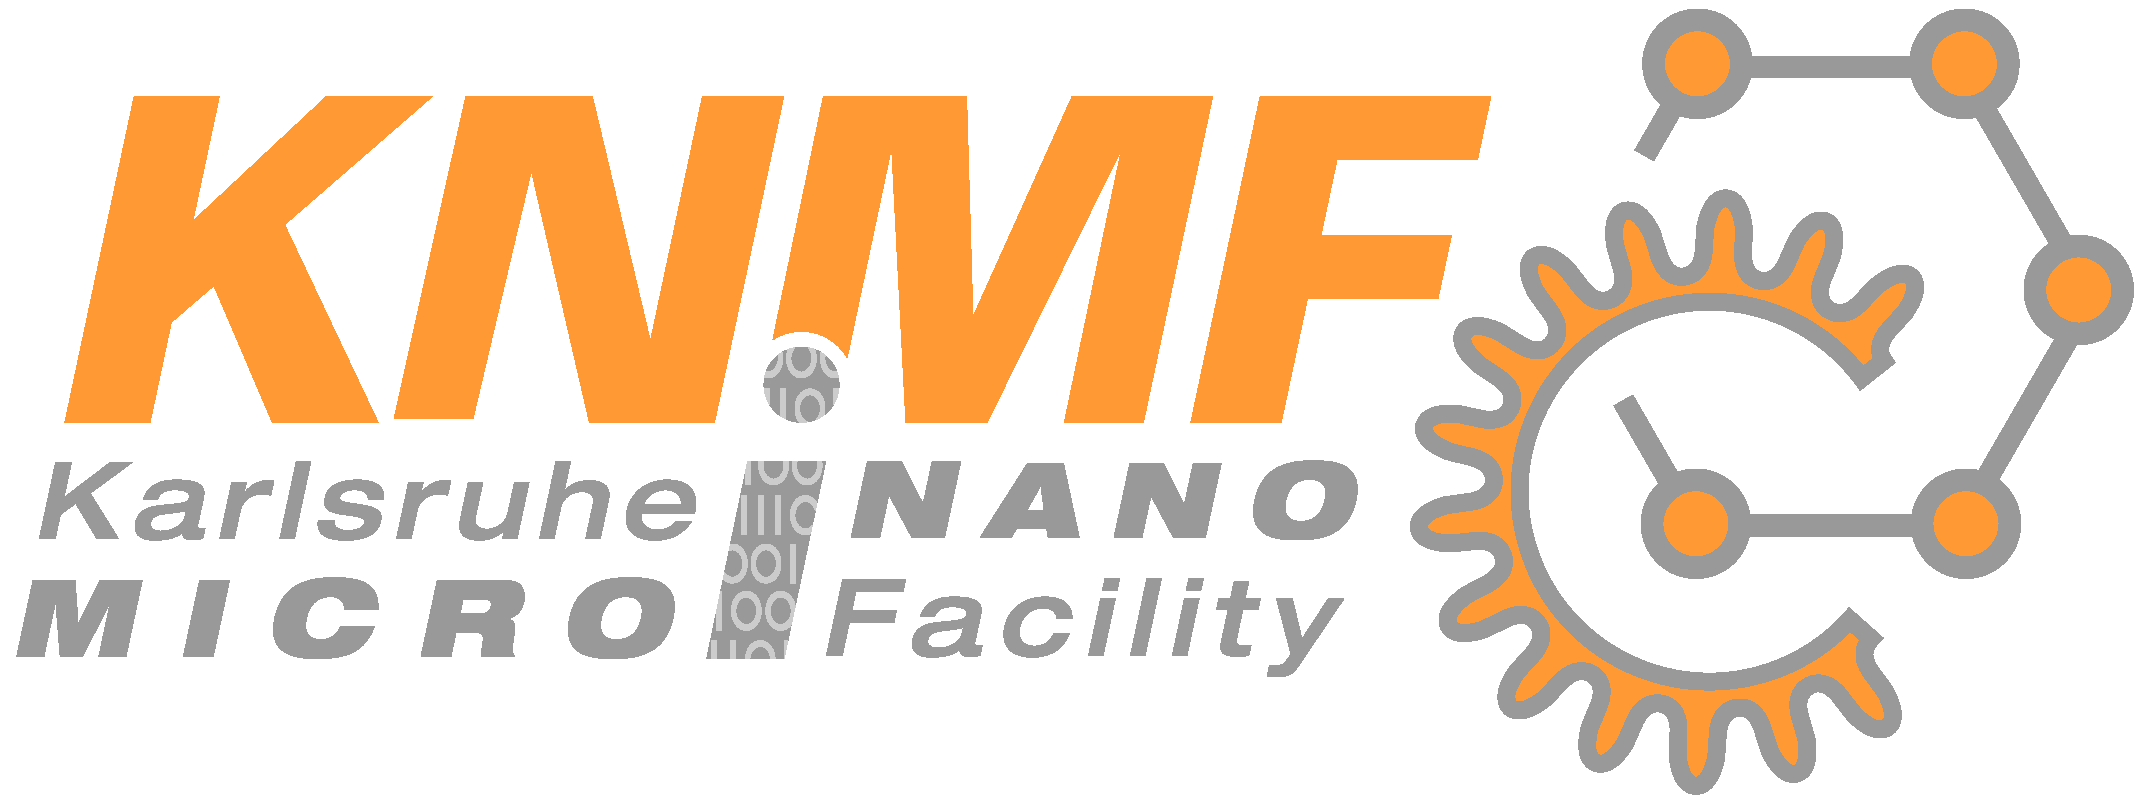 facility_image